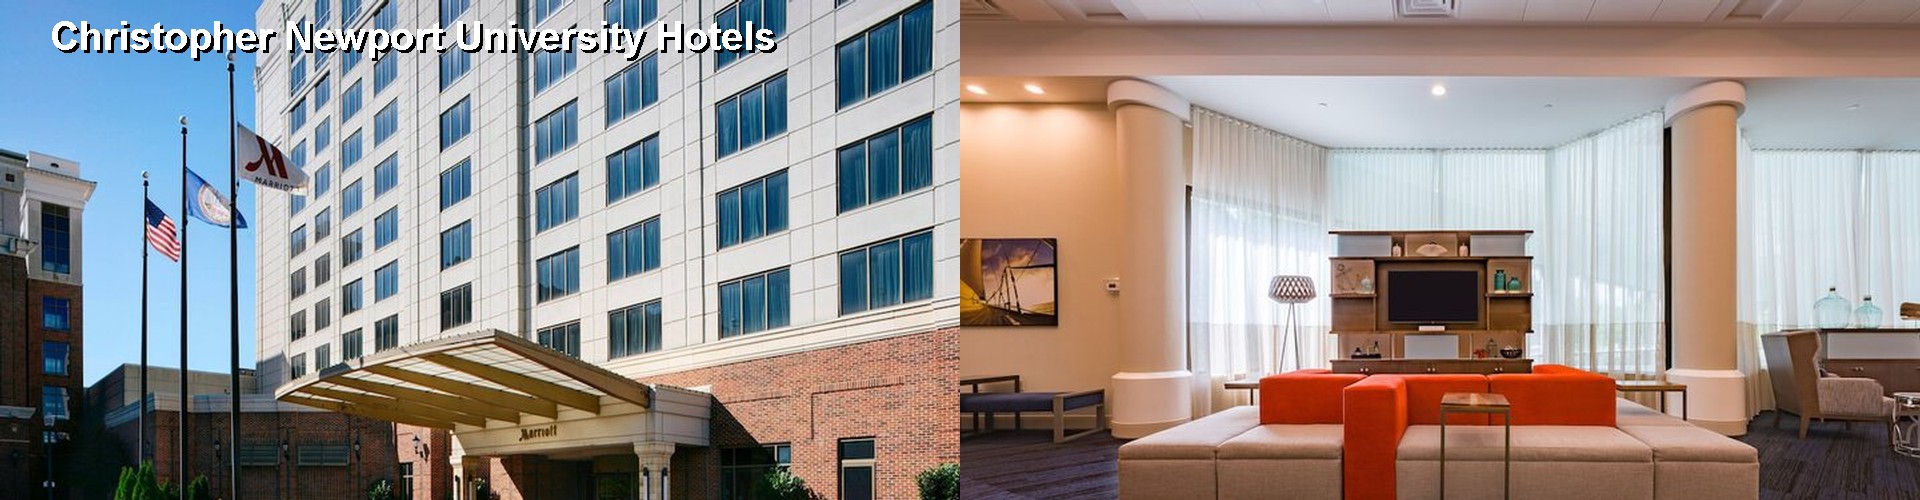 4 Best Hotels near Christopher Newport University